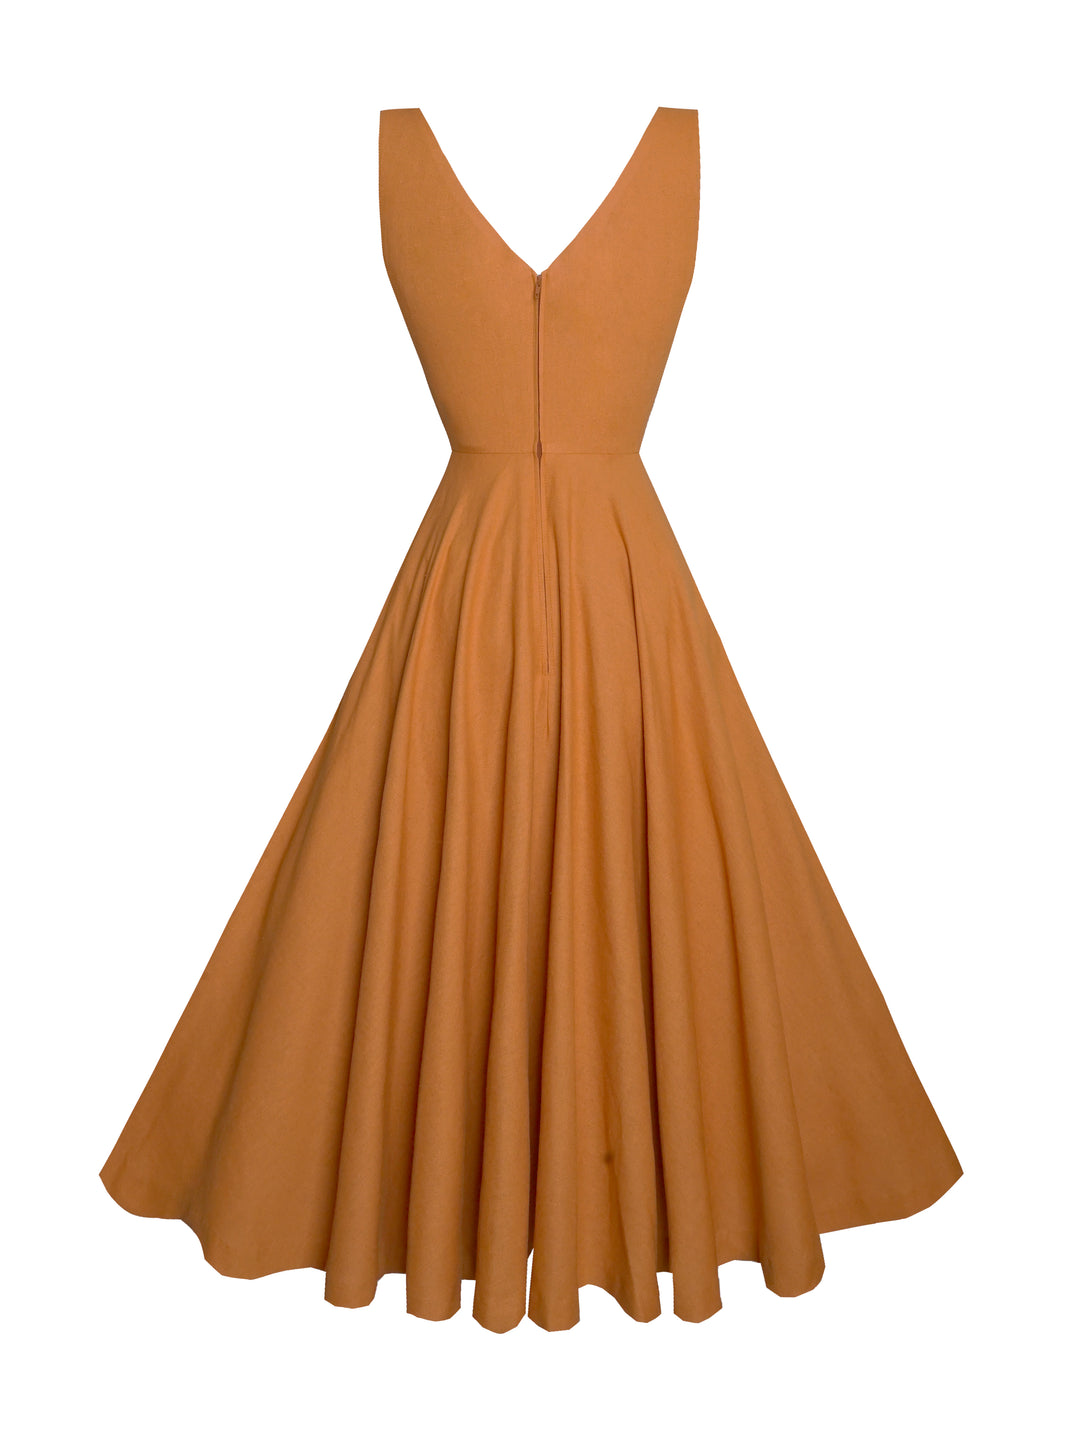 MTO - Diana Dress in Cinnamon Brown Linen